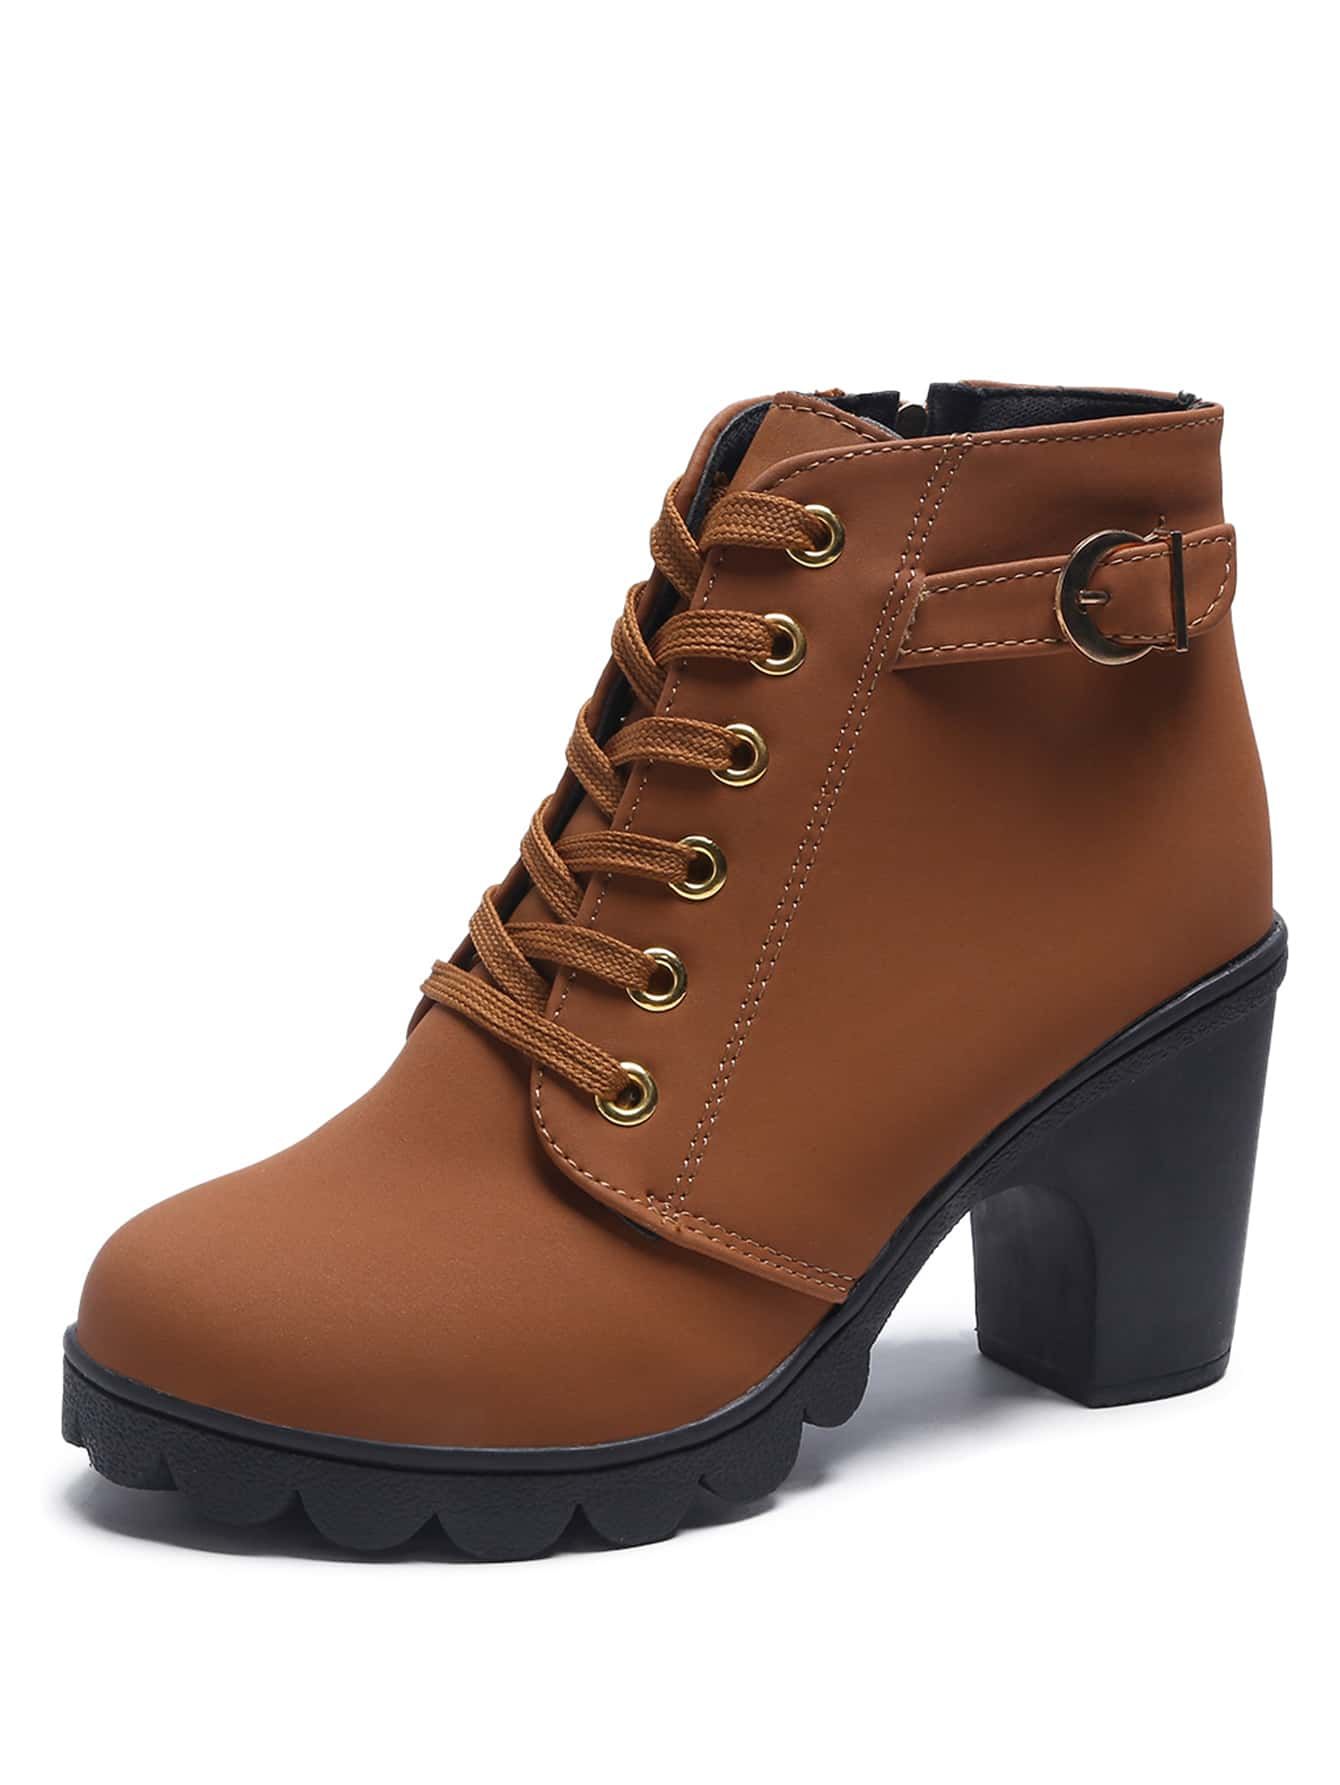 Buckle Decor Chunky Heeled Boots | SHEIN